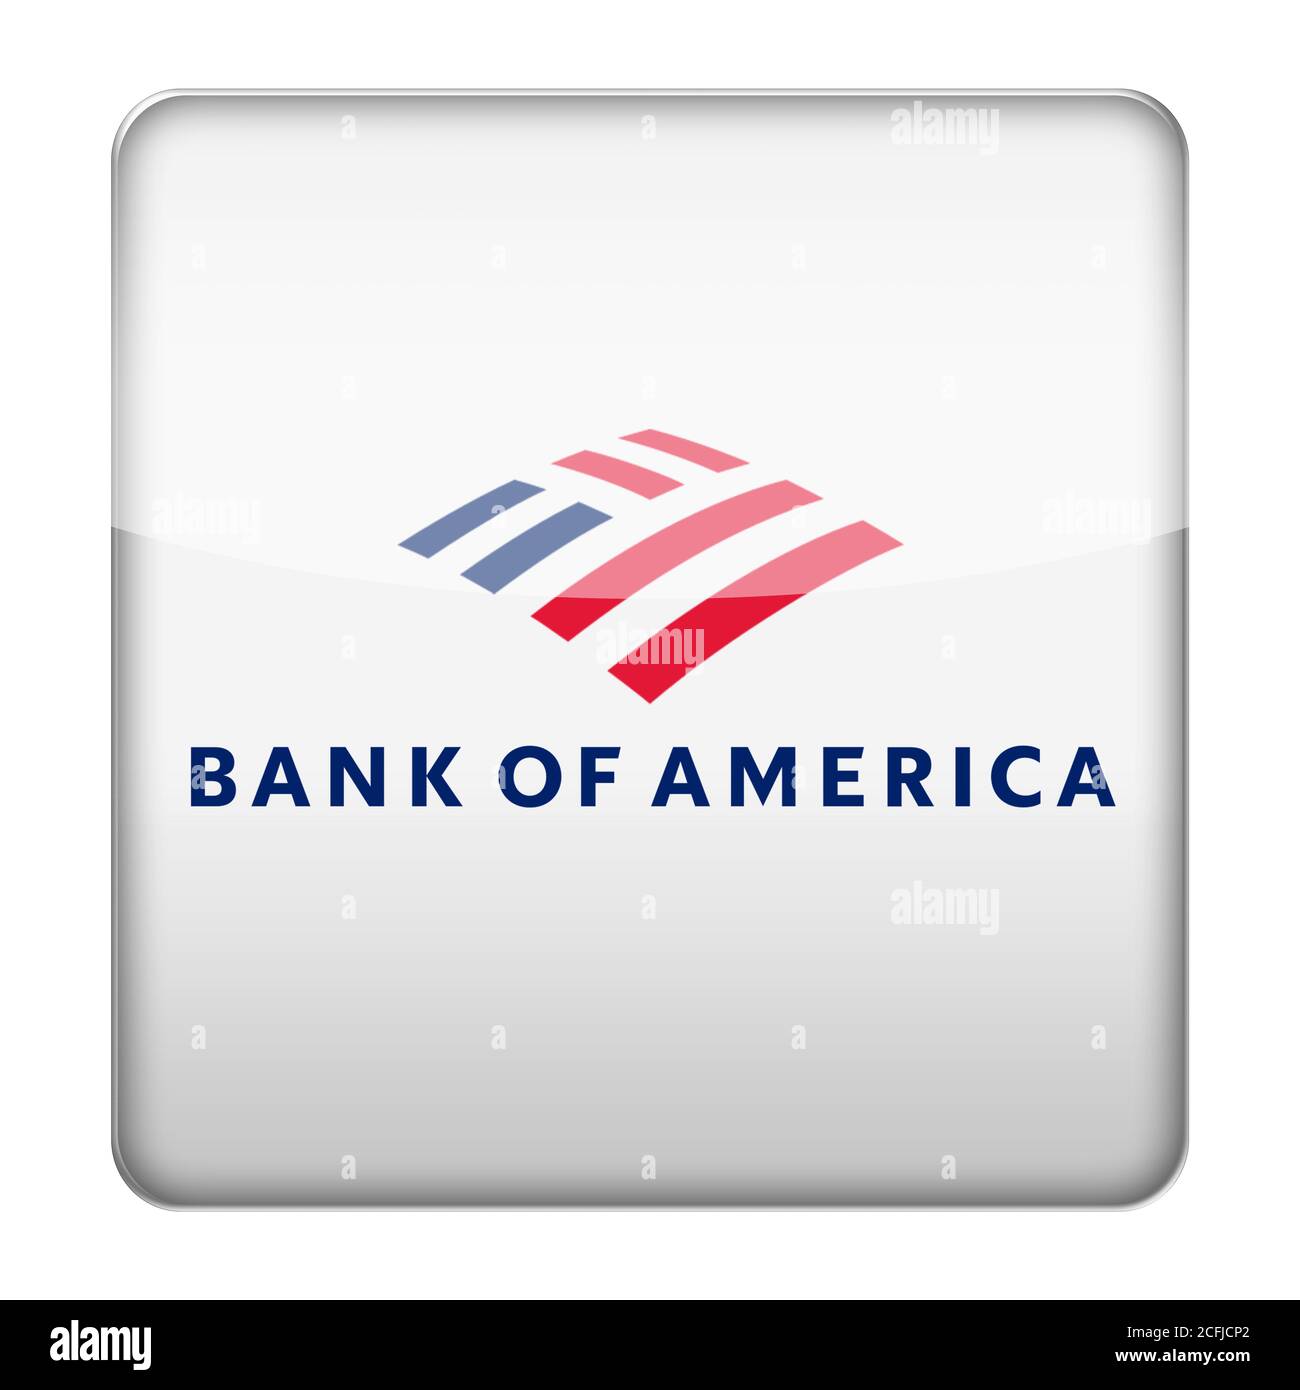 Bank of America logo Stock Photo - Alamy